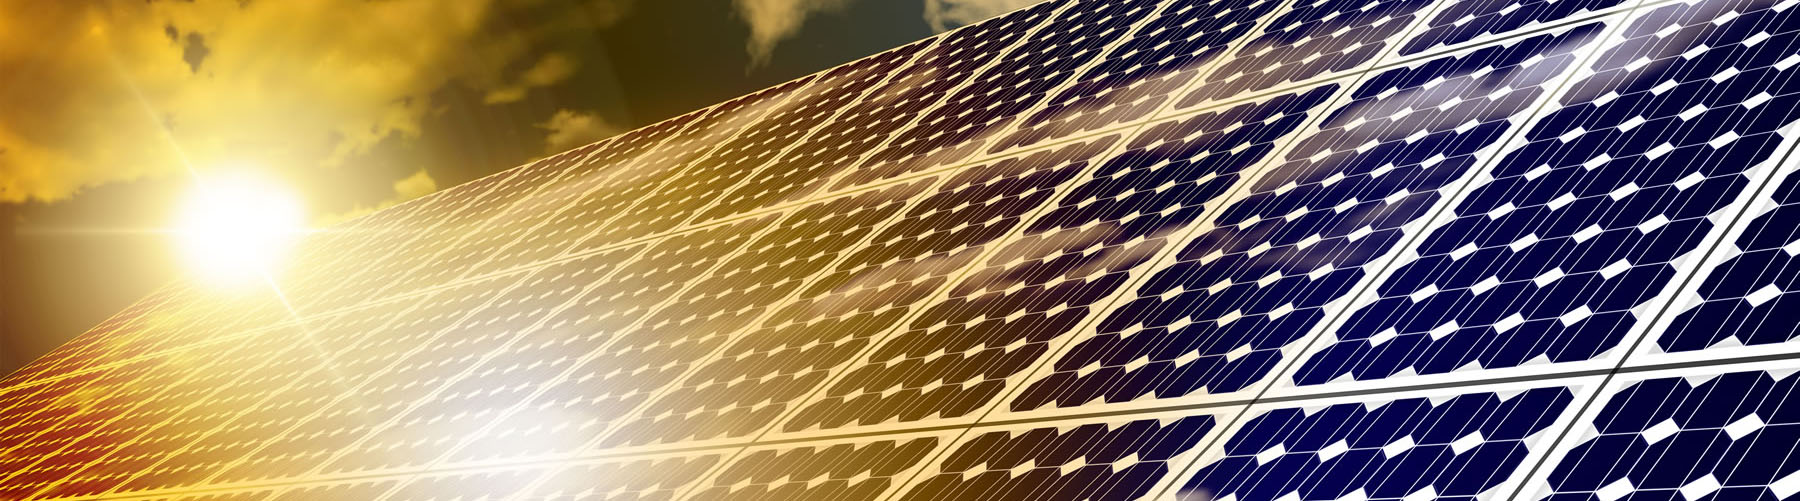 Solar panels absorbing the sun's energy on hot summer day.